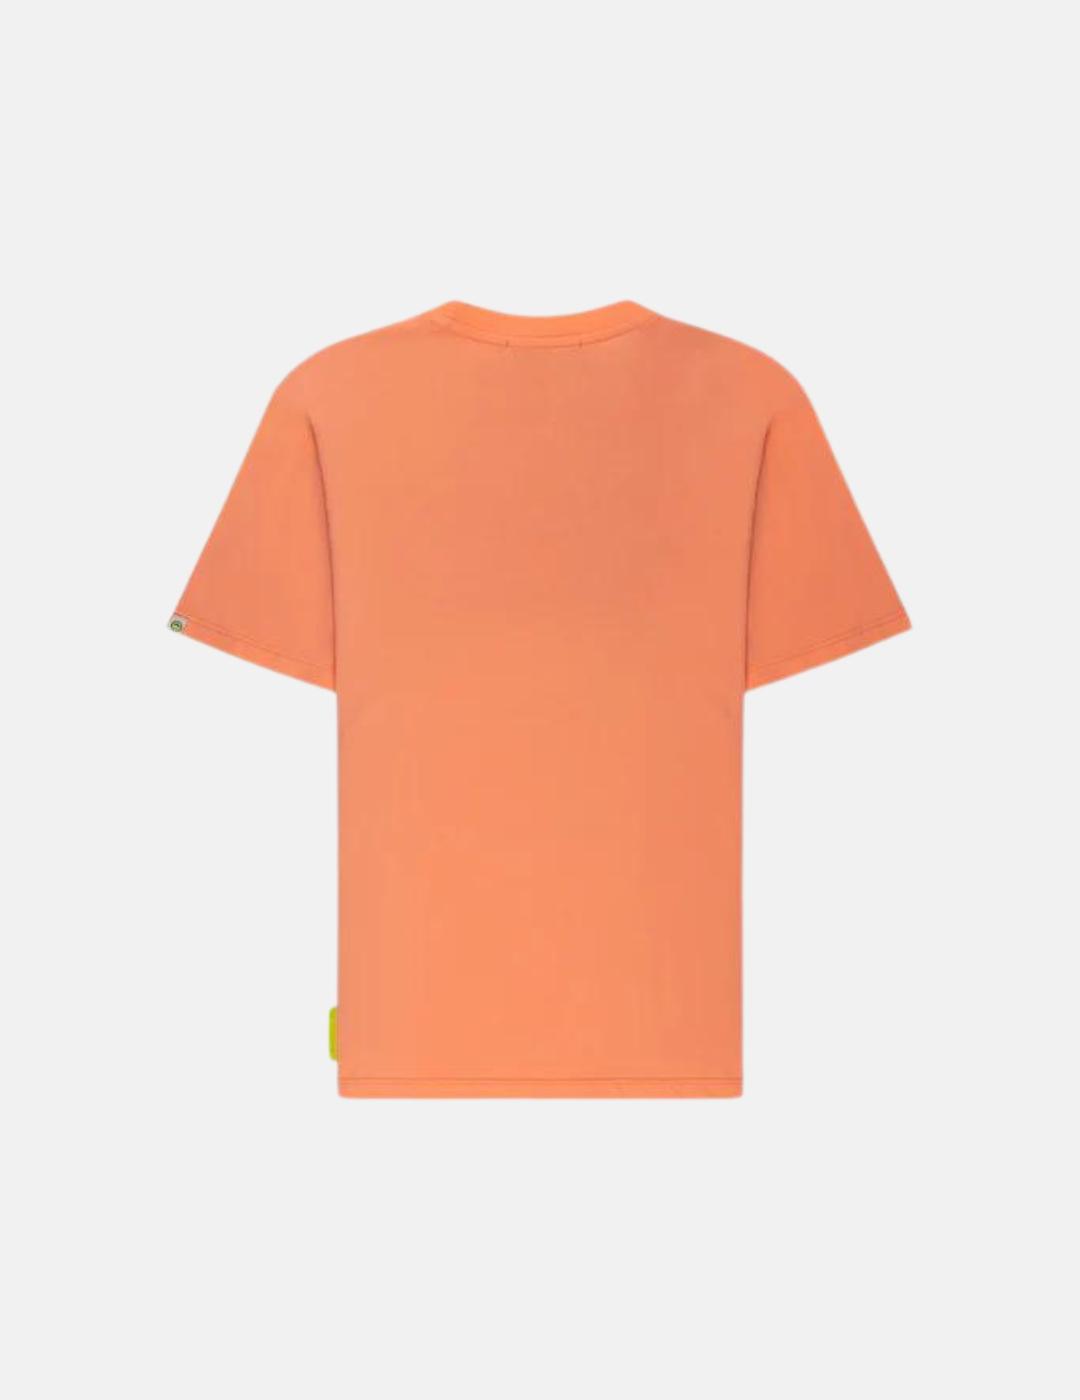 Camiseta naranja Barrow Teddy estampado unisex